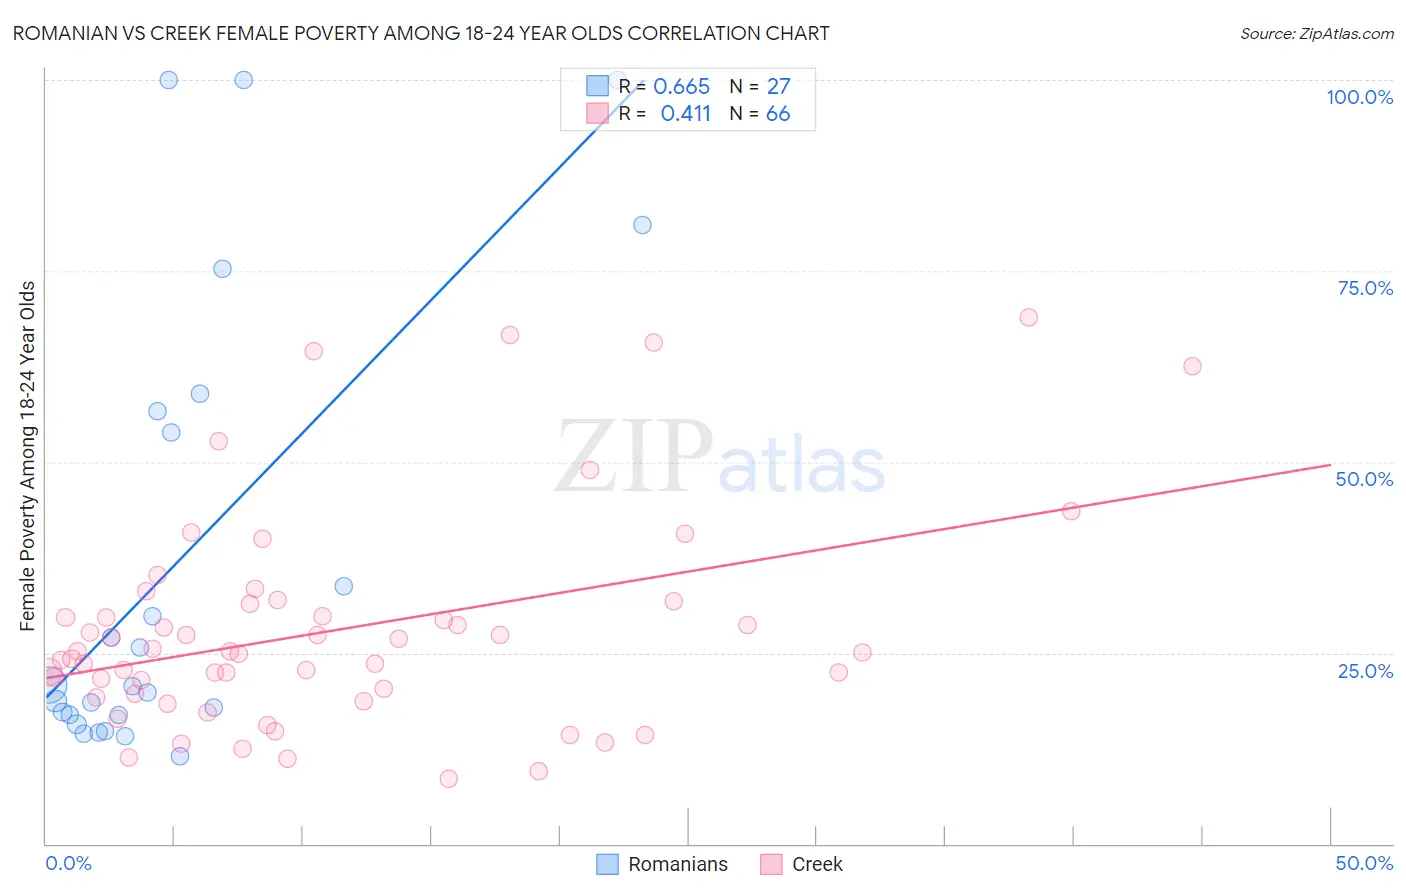 Romanian vs Creek Female Poverty Among 18-24 Year Olds